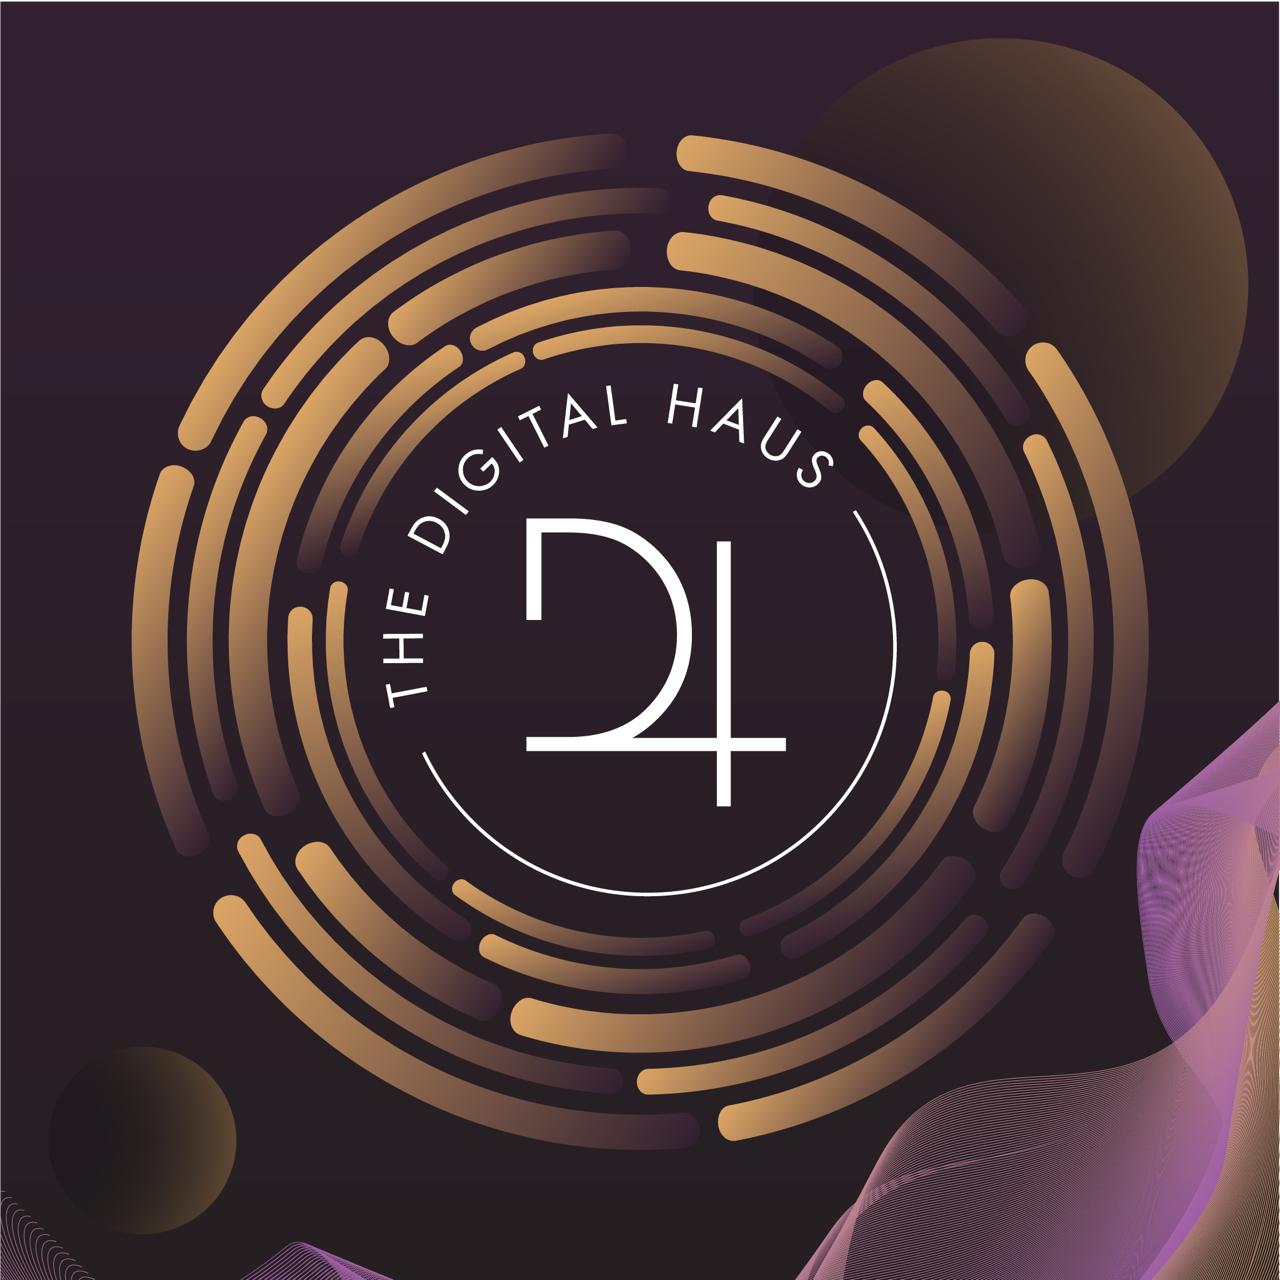 The Digital Haus